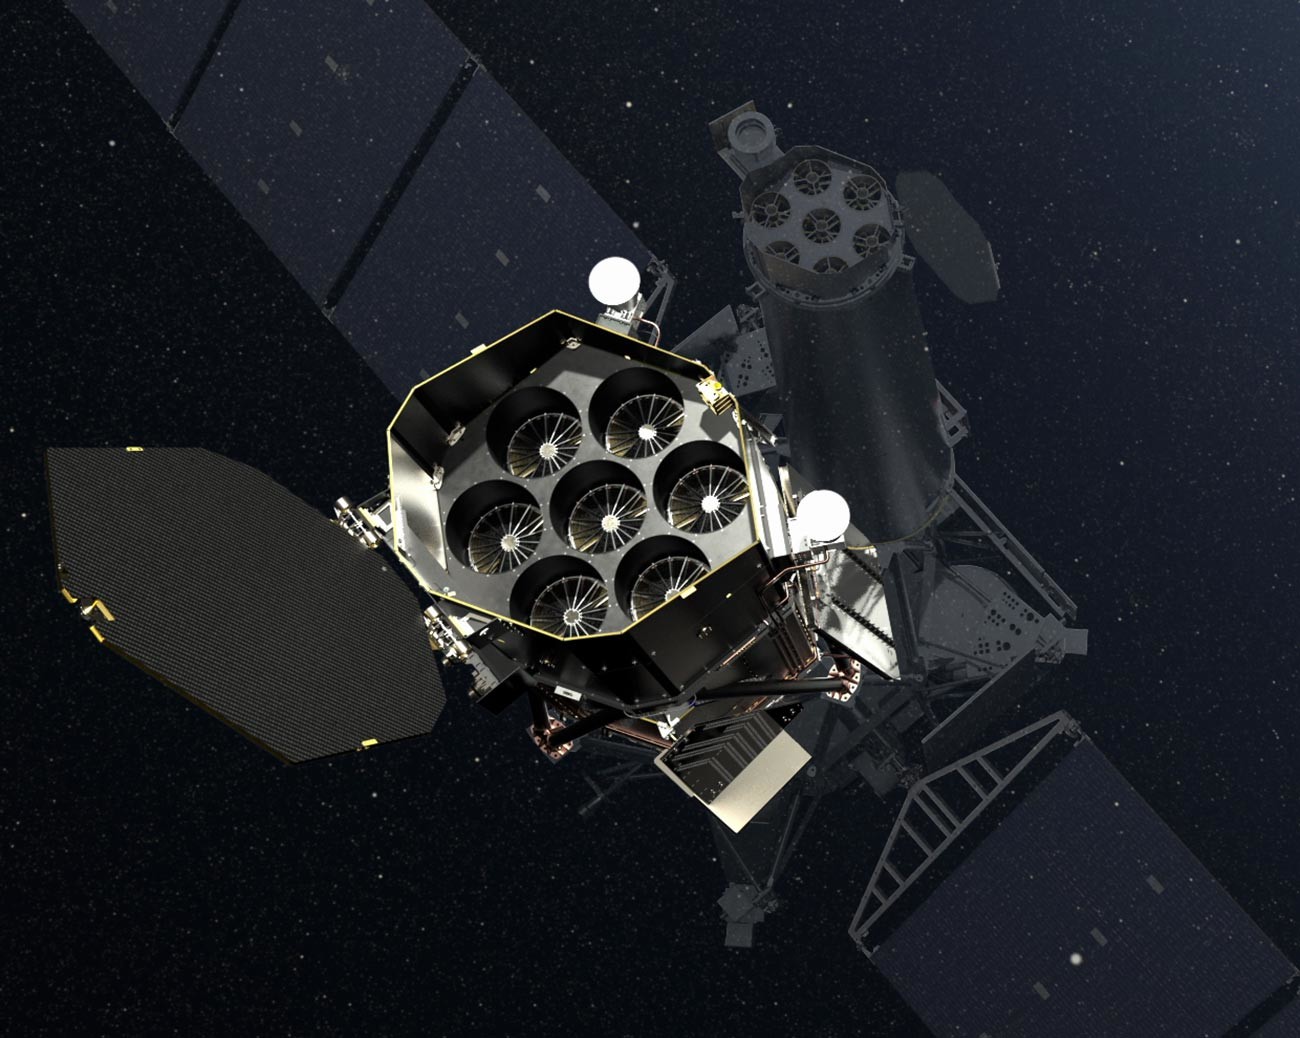 Spektr-RG space observatory